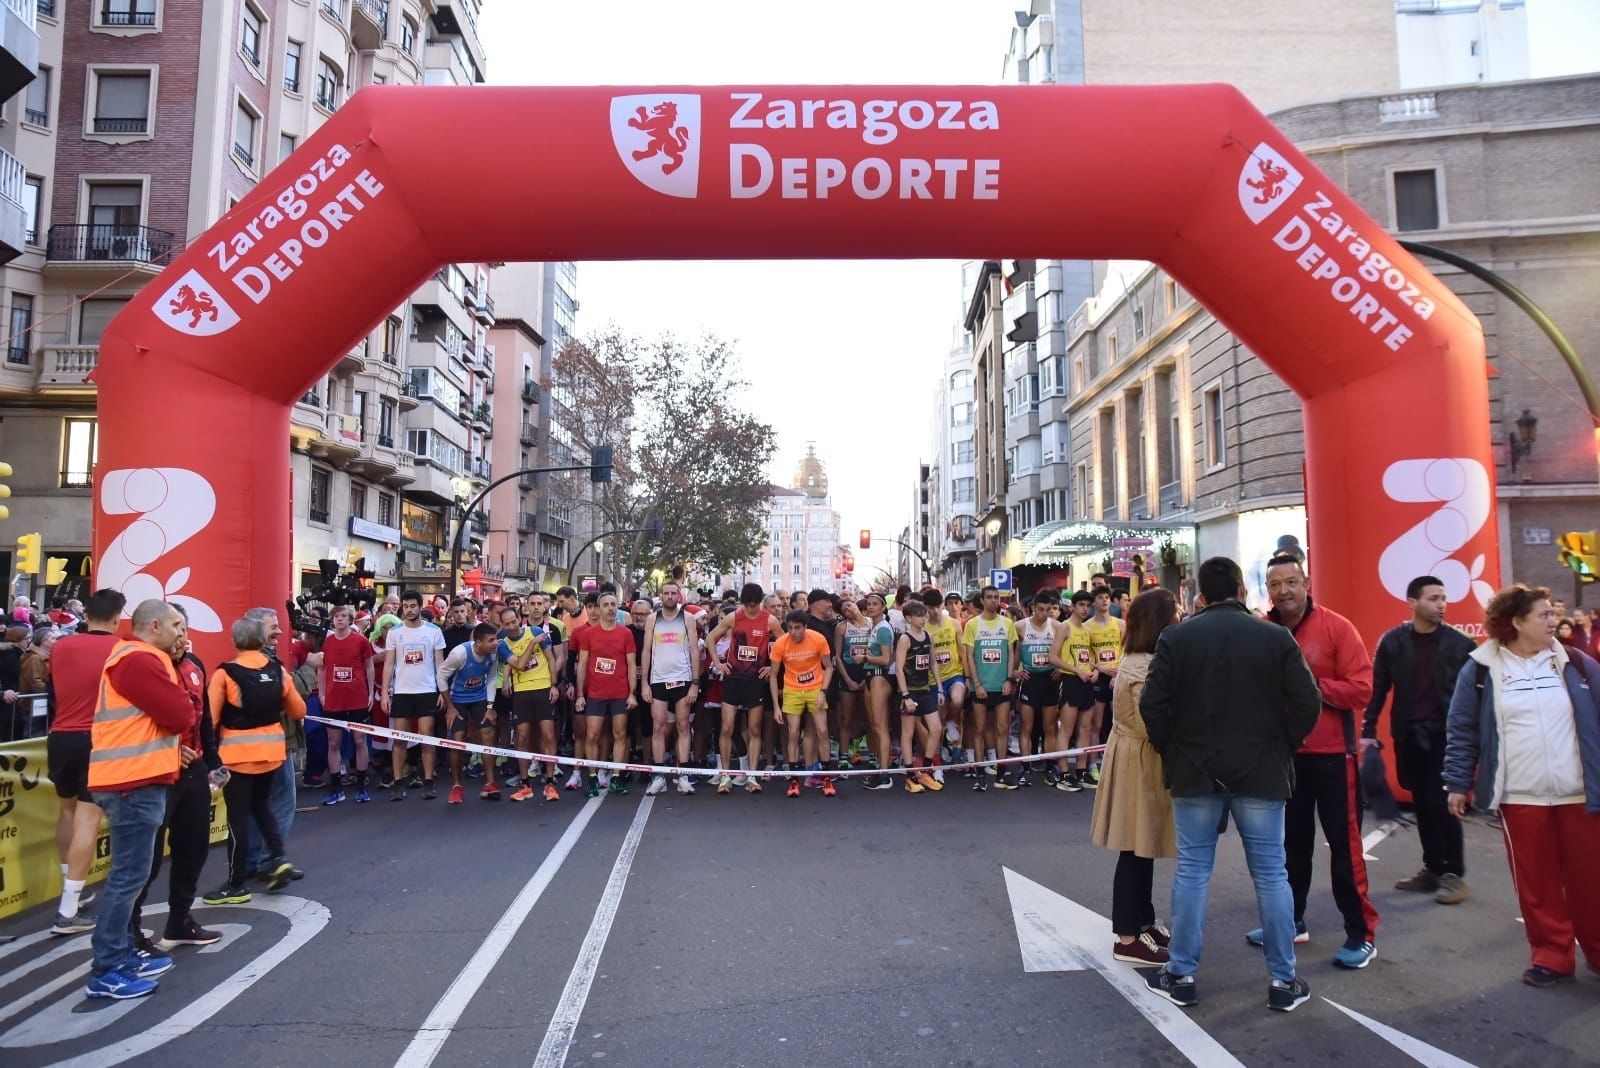 Luis Pastor y Cristina Espejo vencen la San Silvestre de Zaragoza 2022